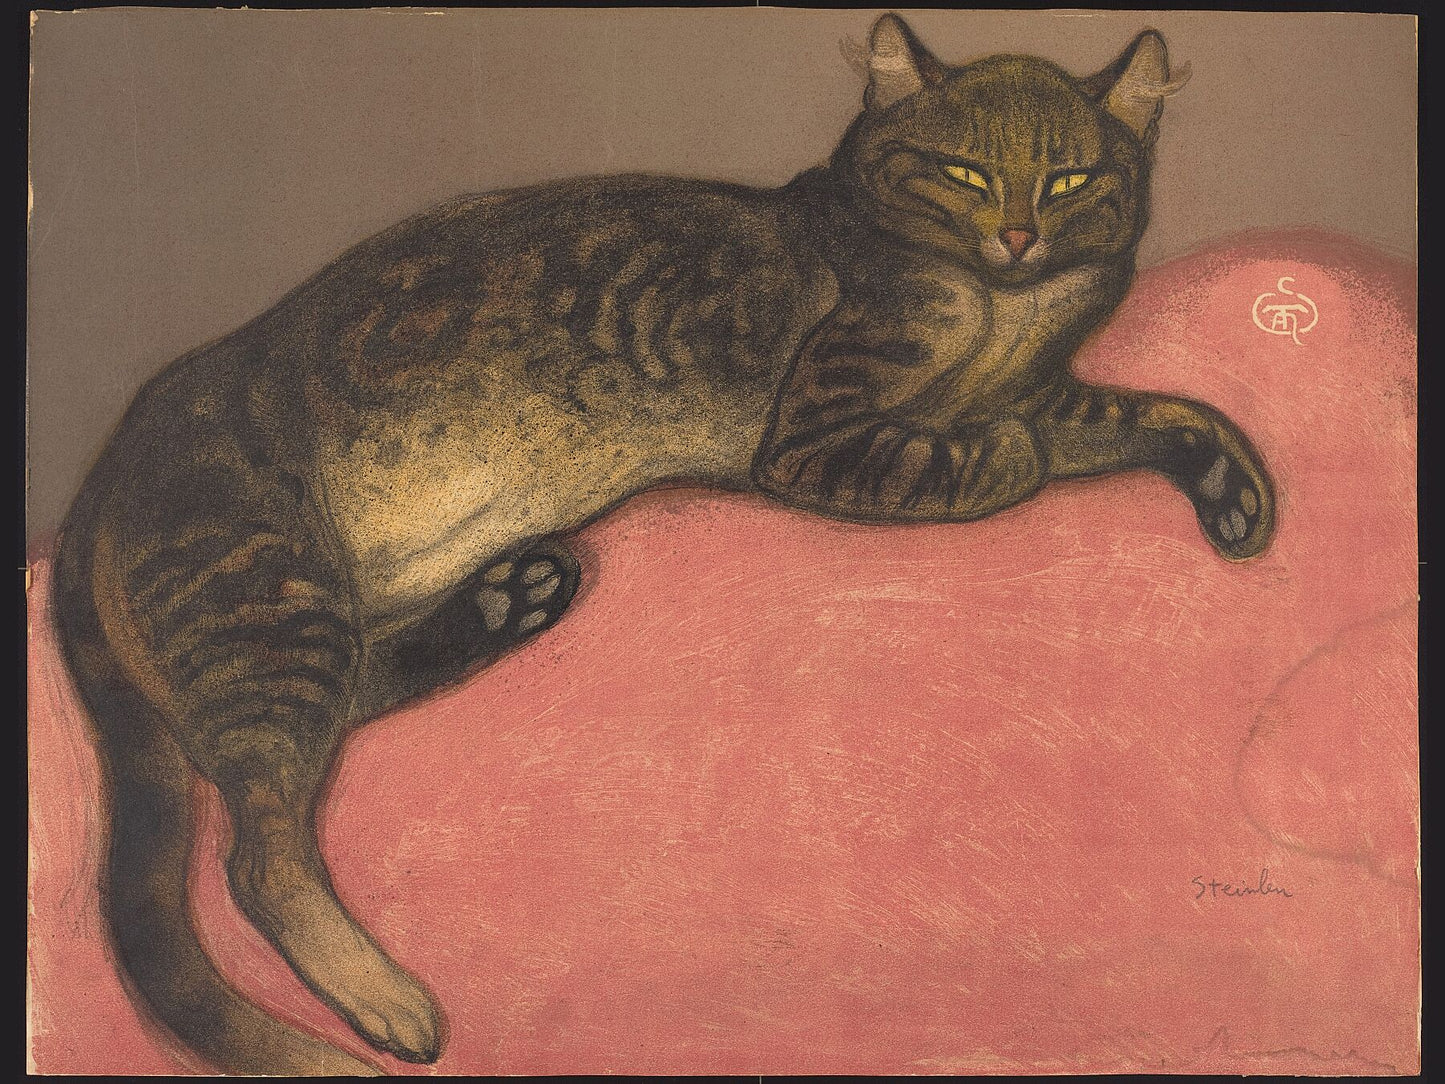 Winter Cat on a Cushion (L'hiver Chat sur un coussin) by Theophile Alexandre Steinlen